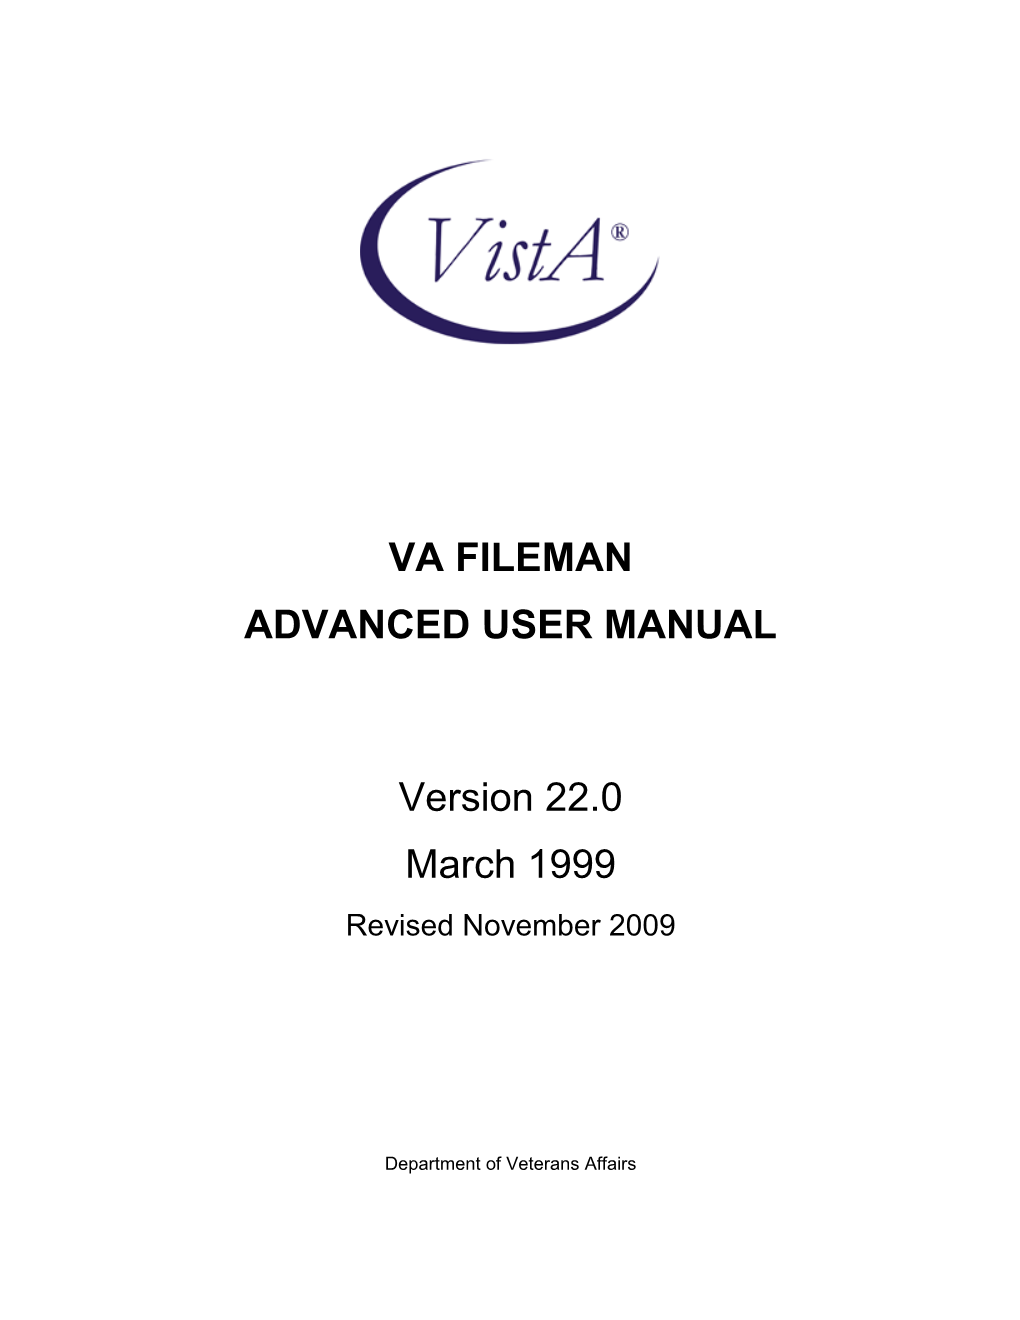 VA Fileman Advanced User Manual